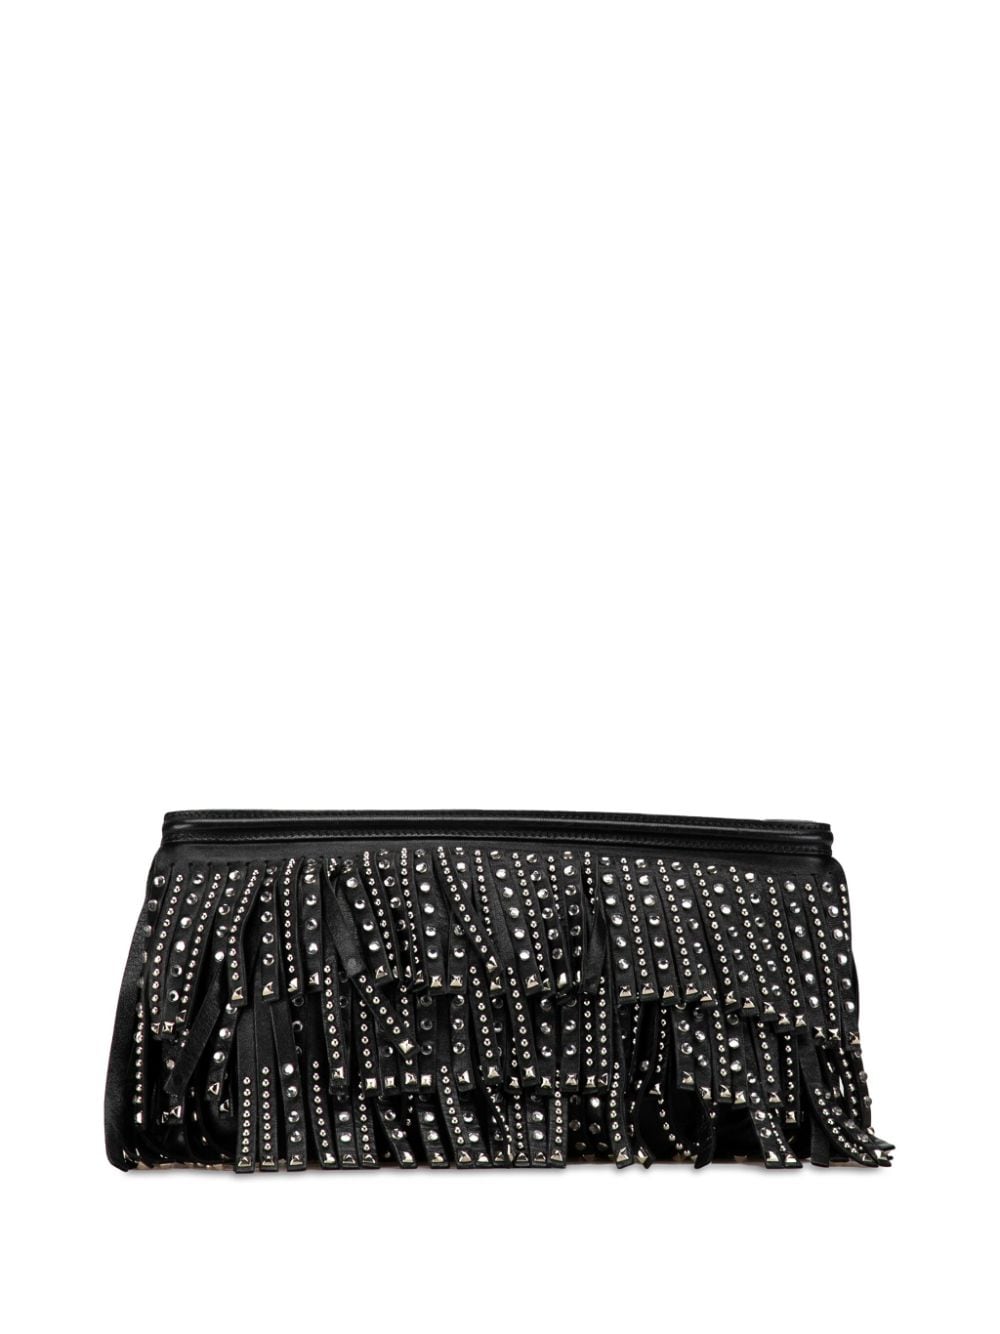 Pre-owned Prada 2013-2023 Leather Studded Fringe Clutch Bag In Black